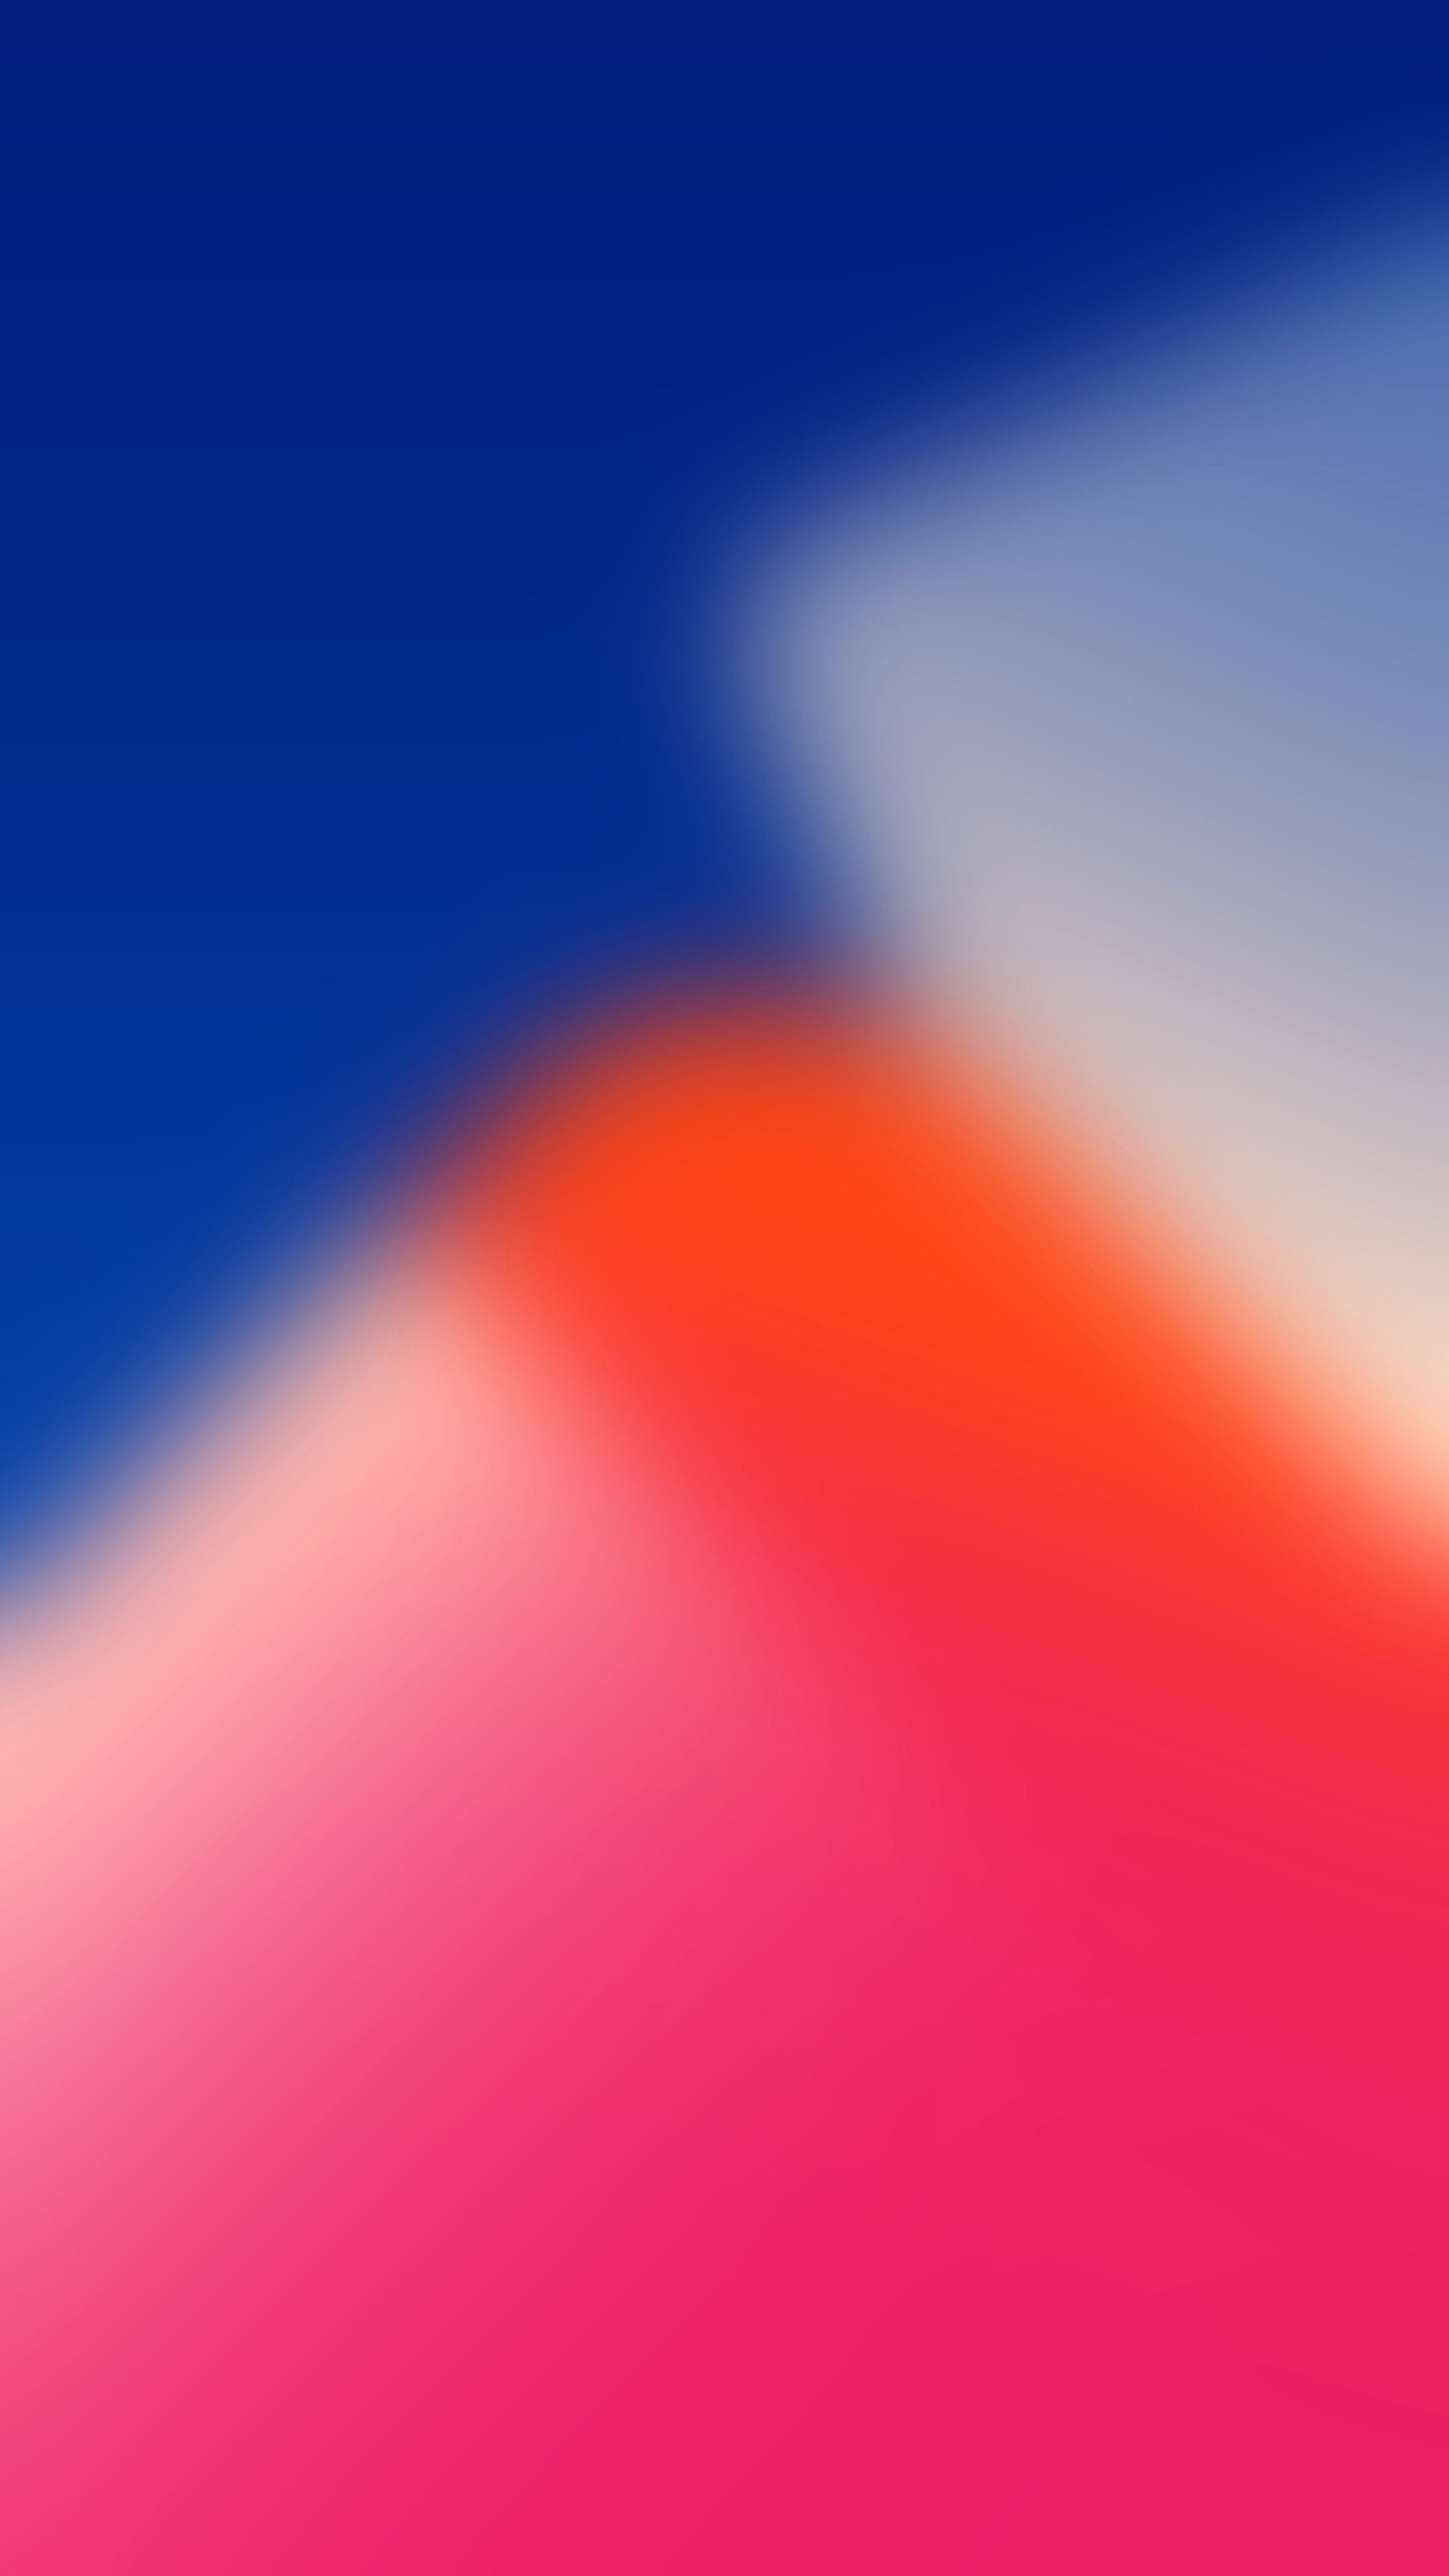 iPhone 5s Original Wallpaper Blue Sky Red Daytime Orange